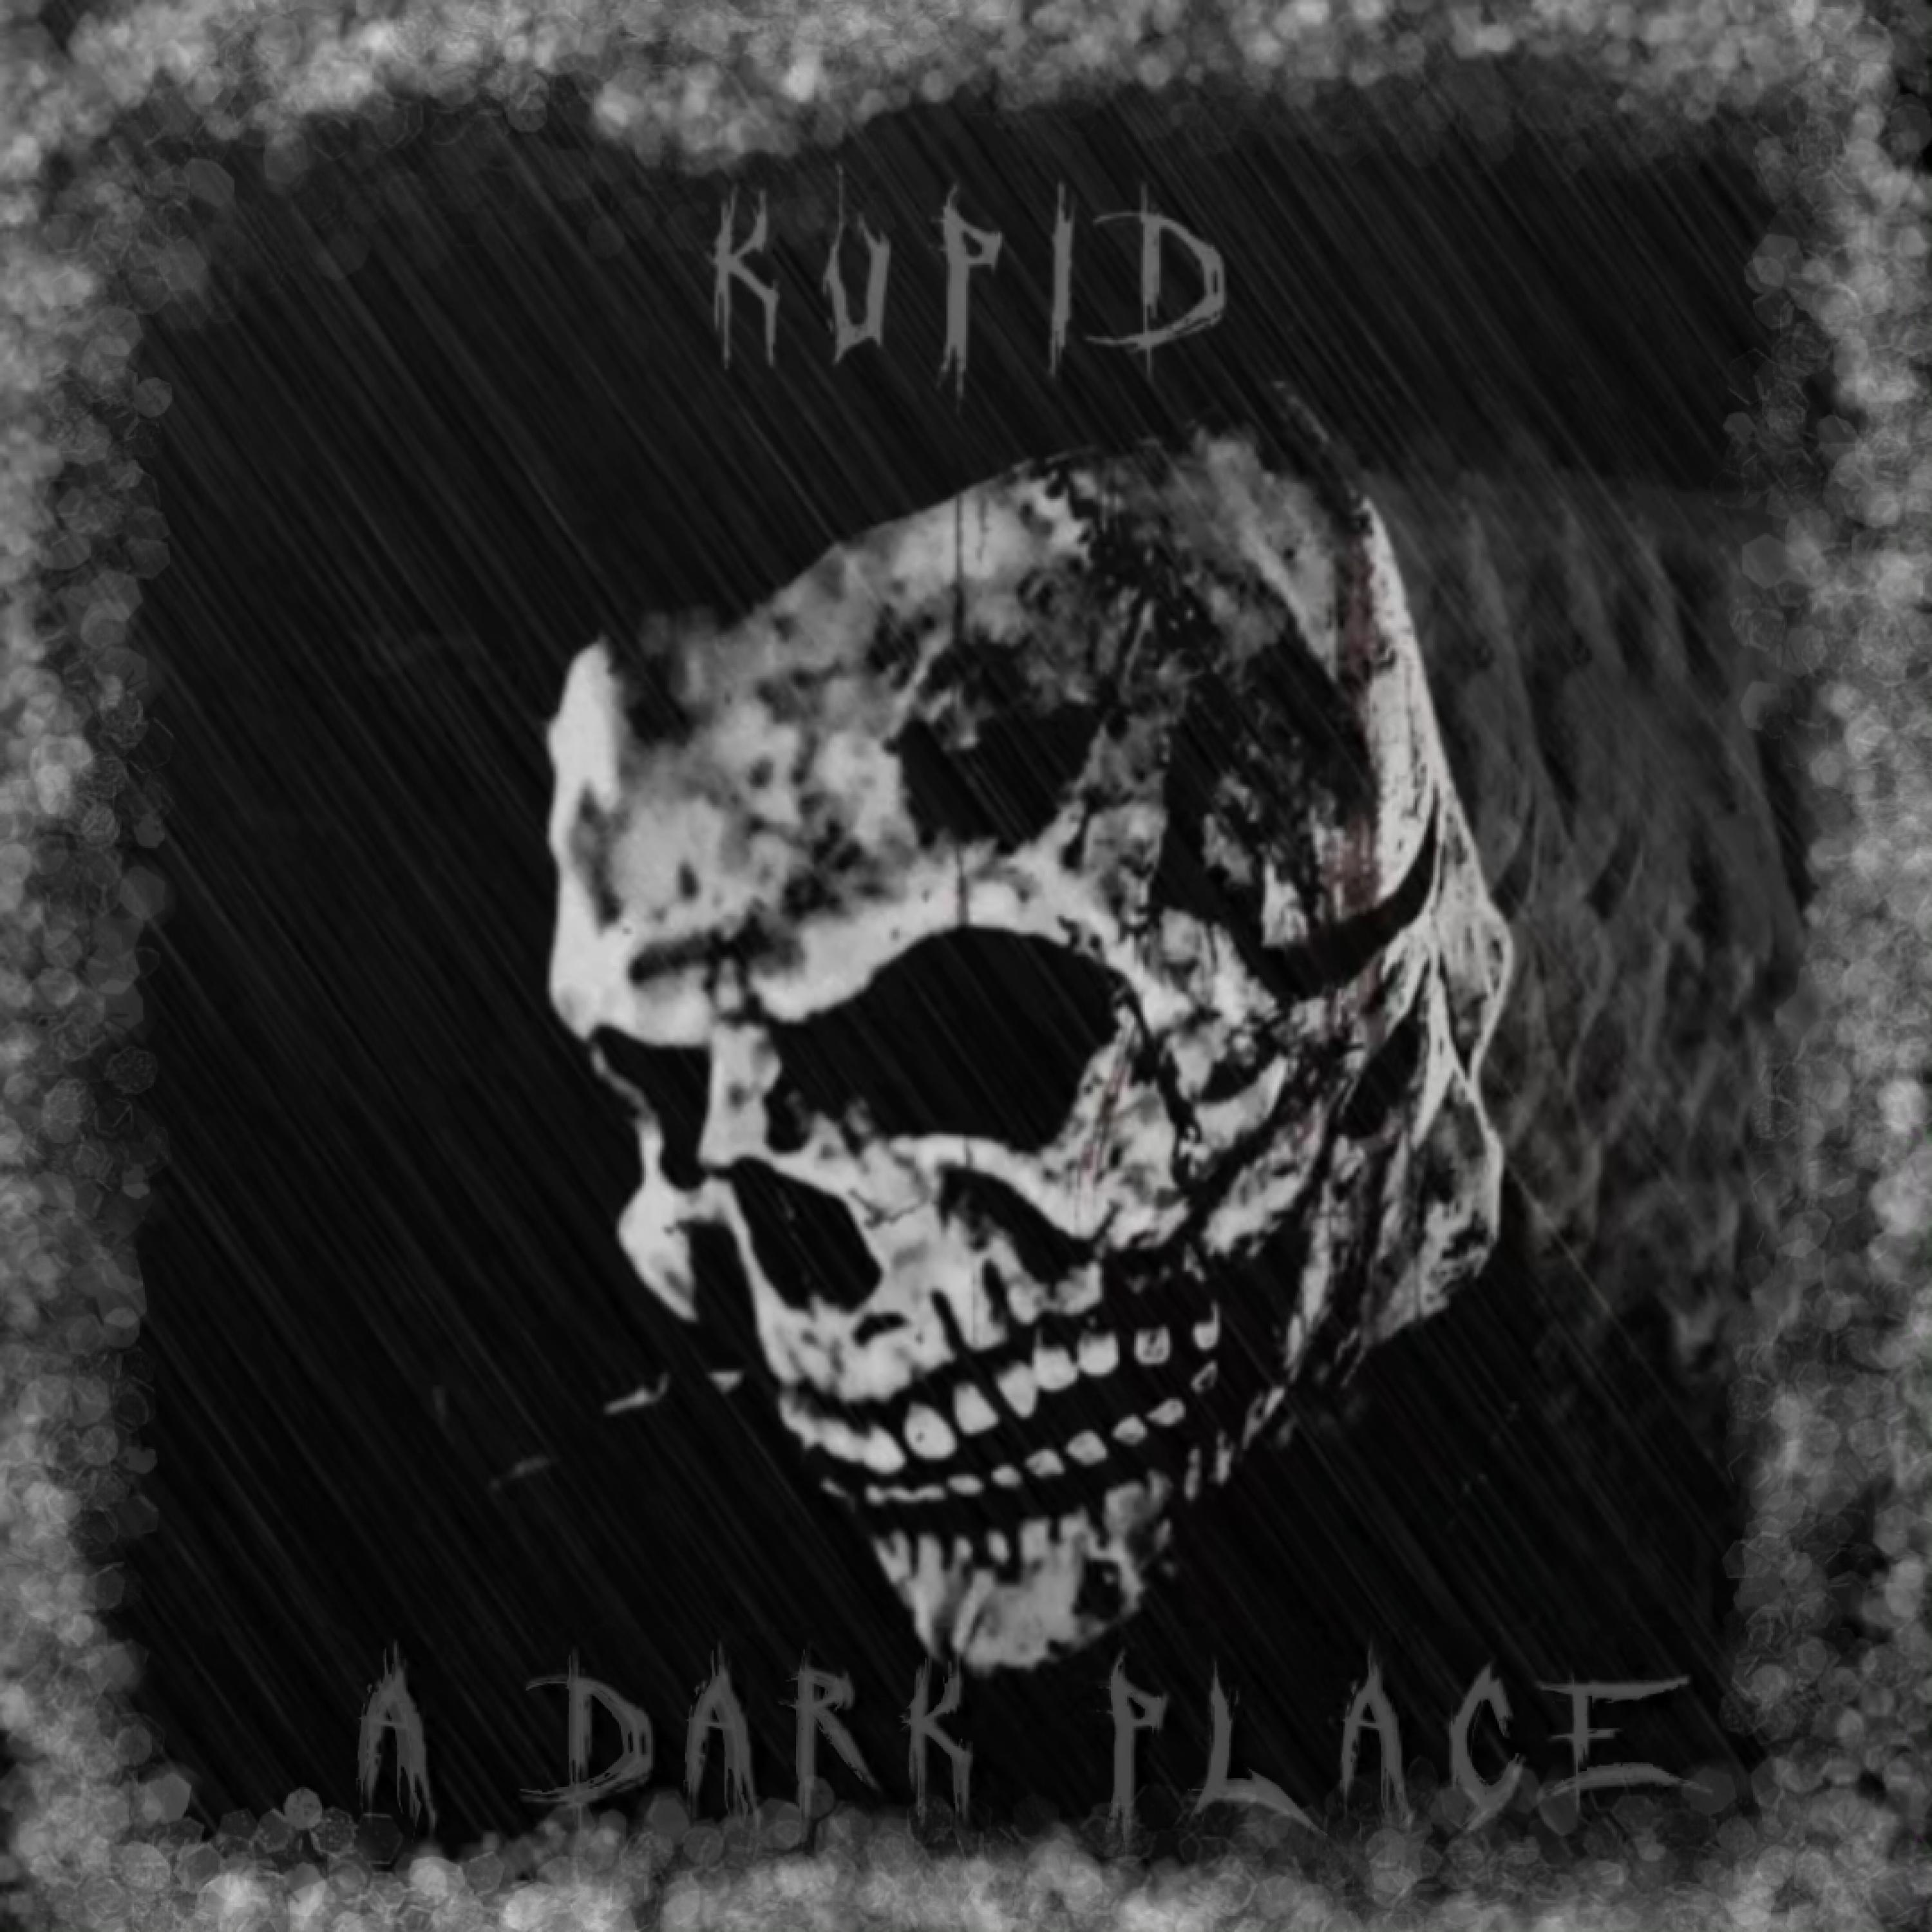 Kupid - A Dark Place